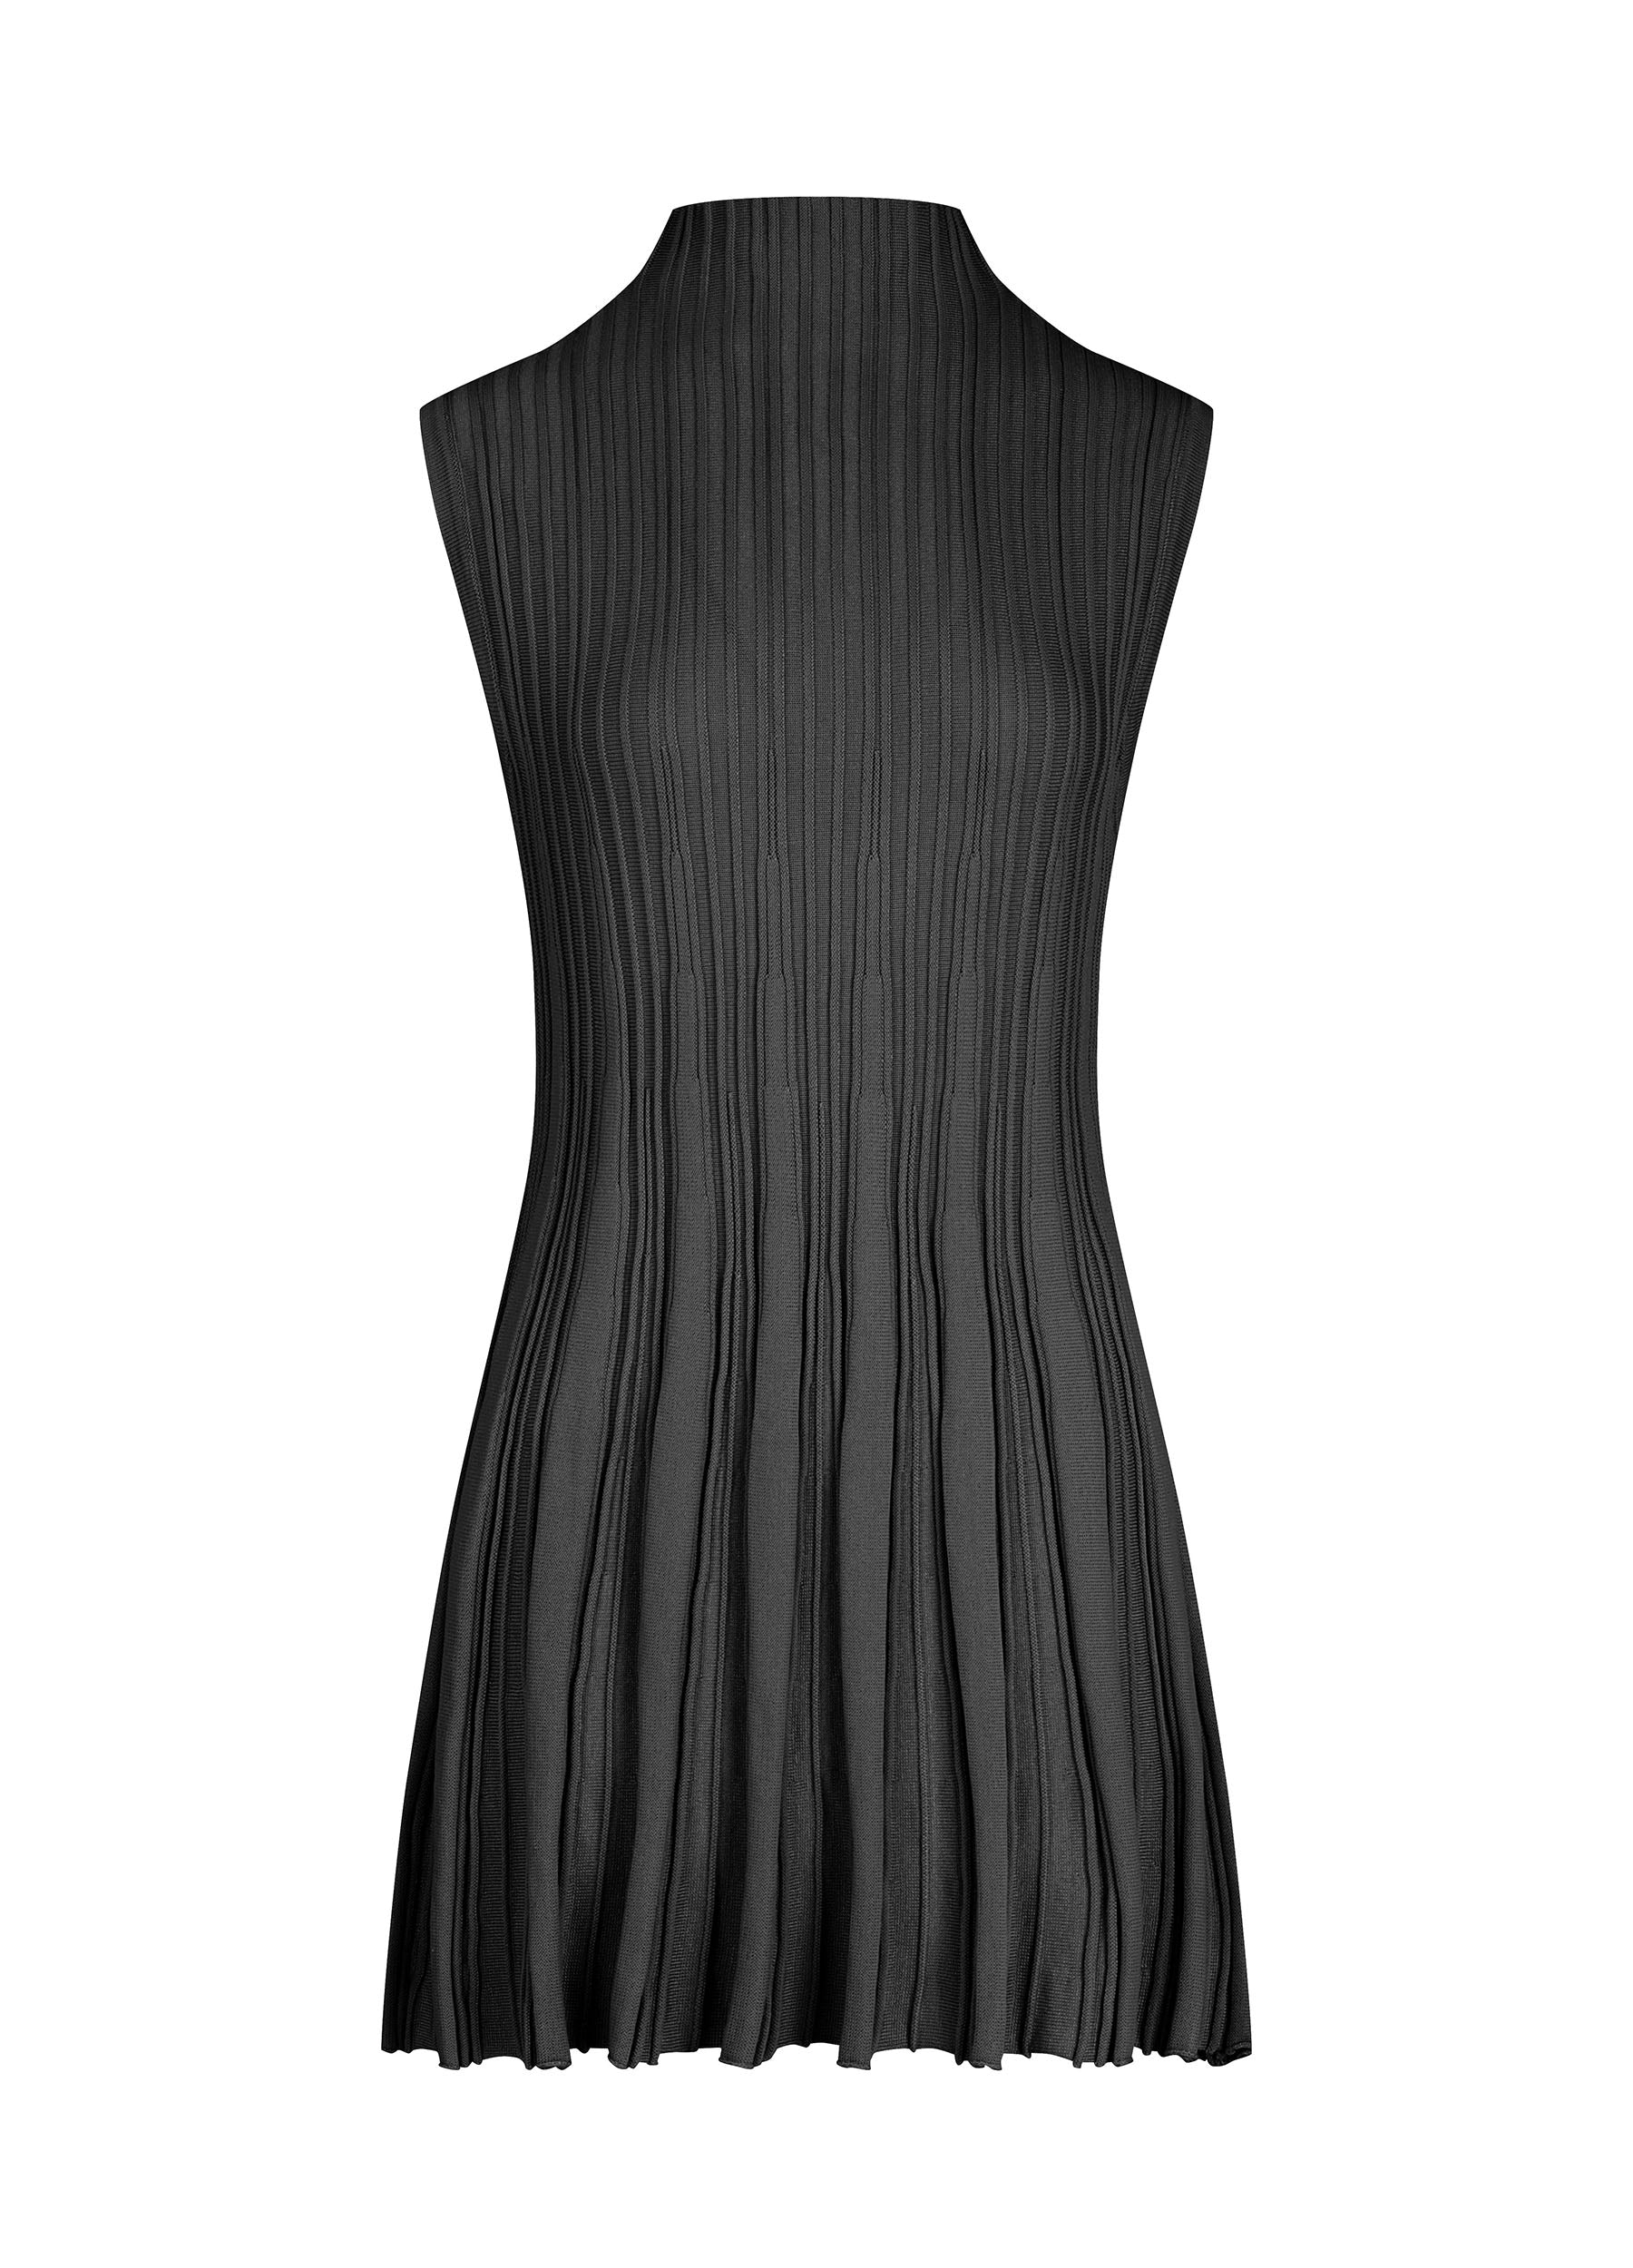 MECALA Women's Black Knit Dress Sleeveless Pleated Mini Dress